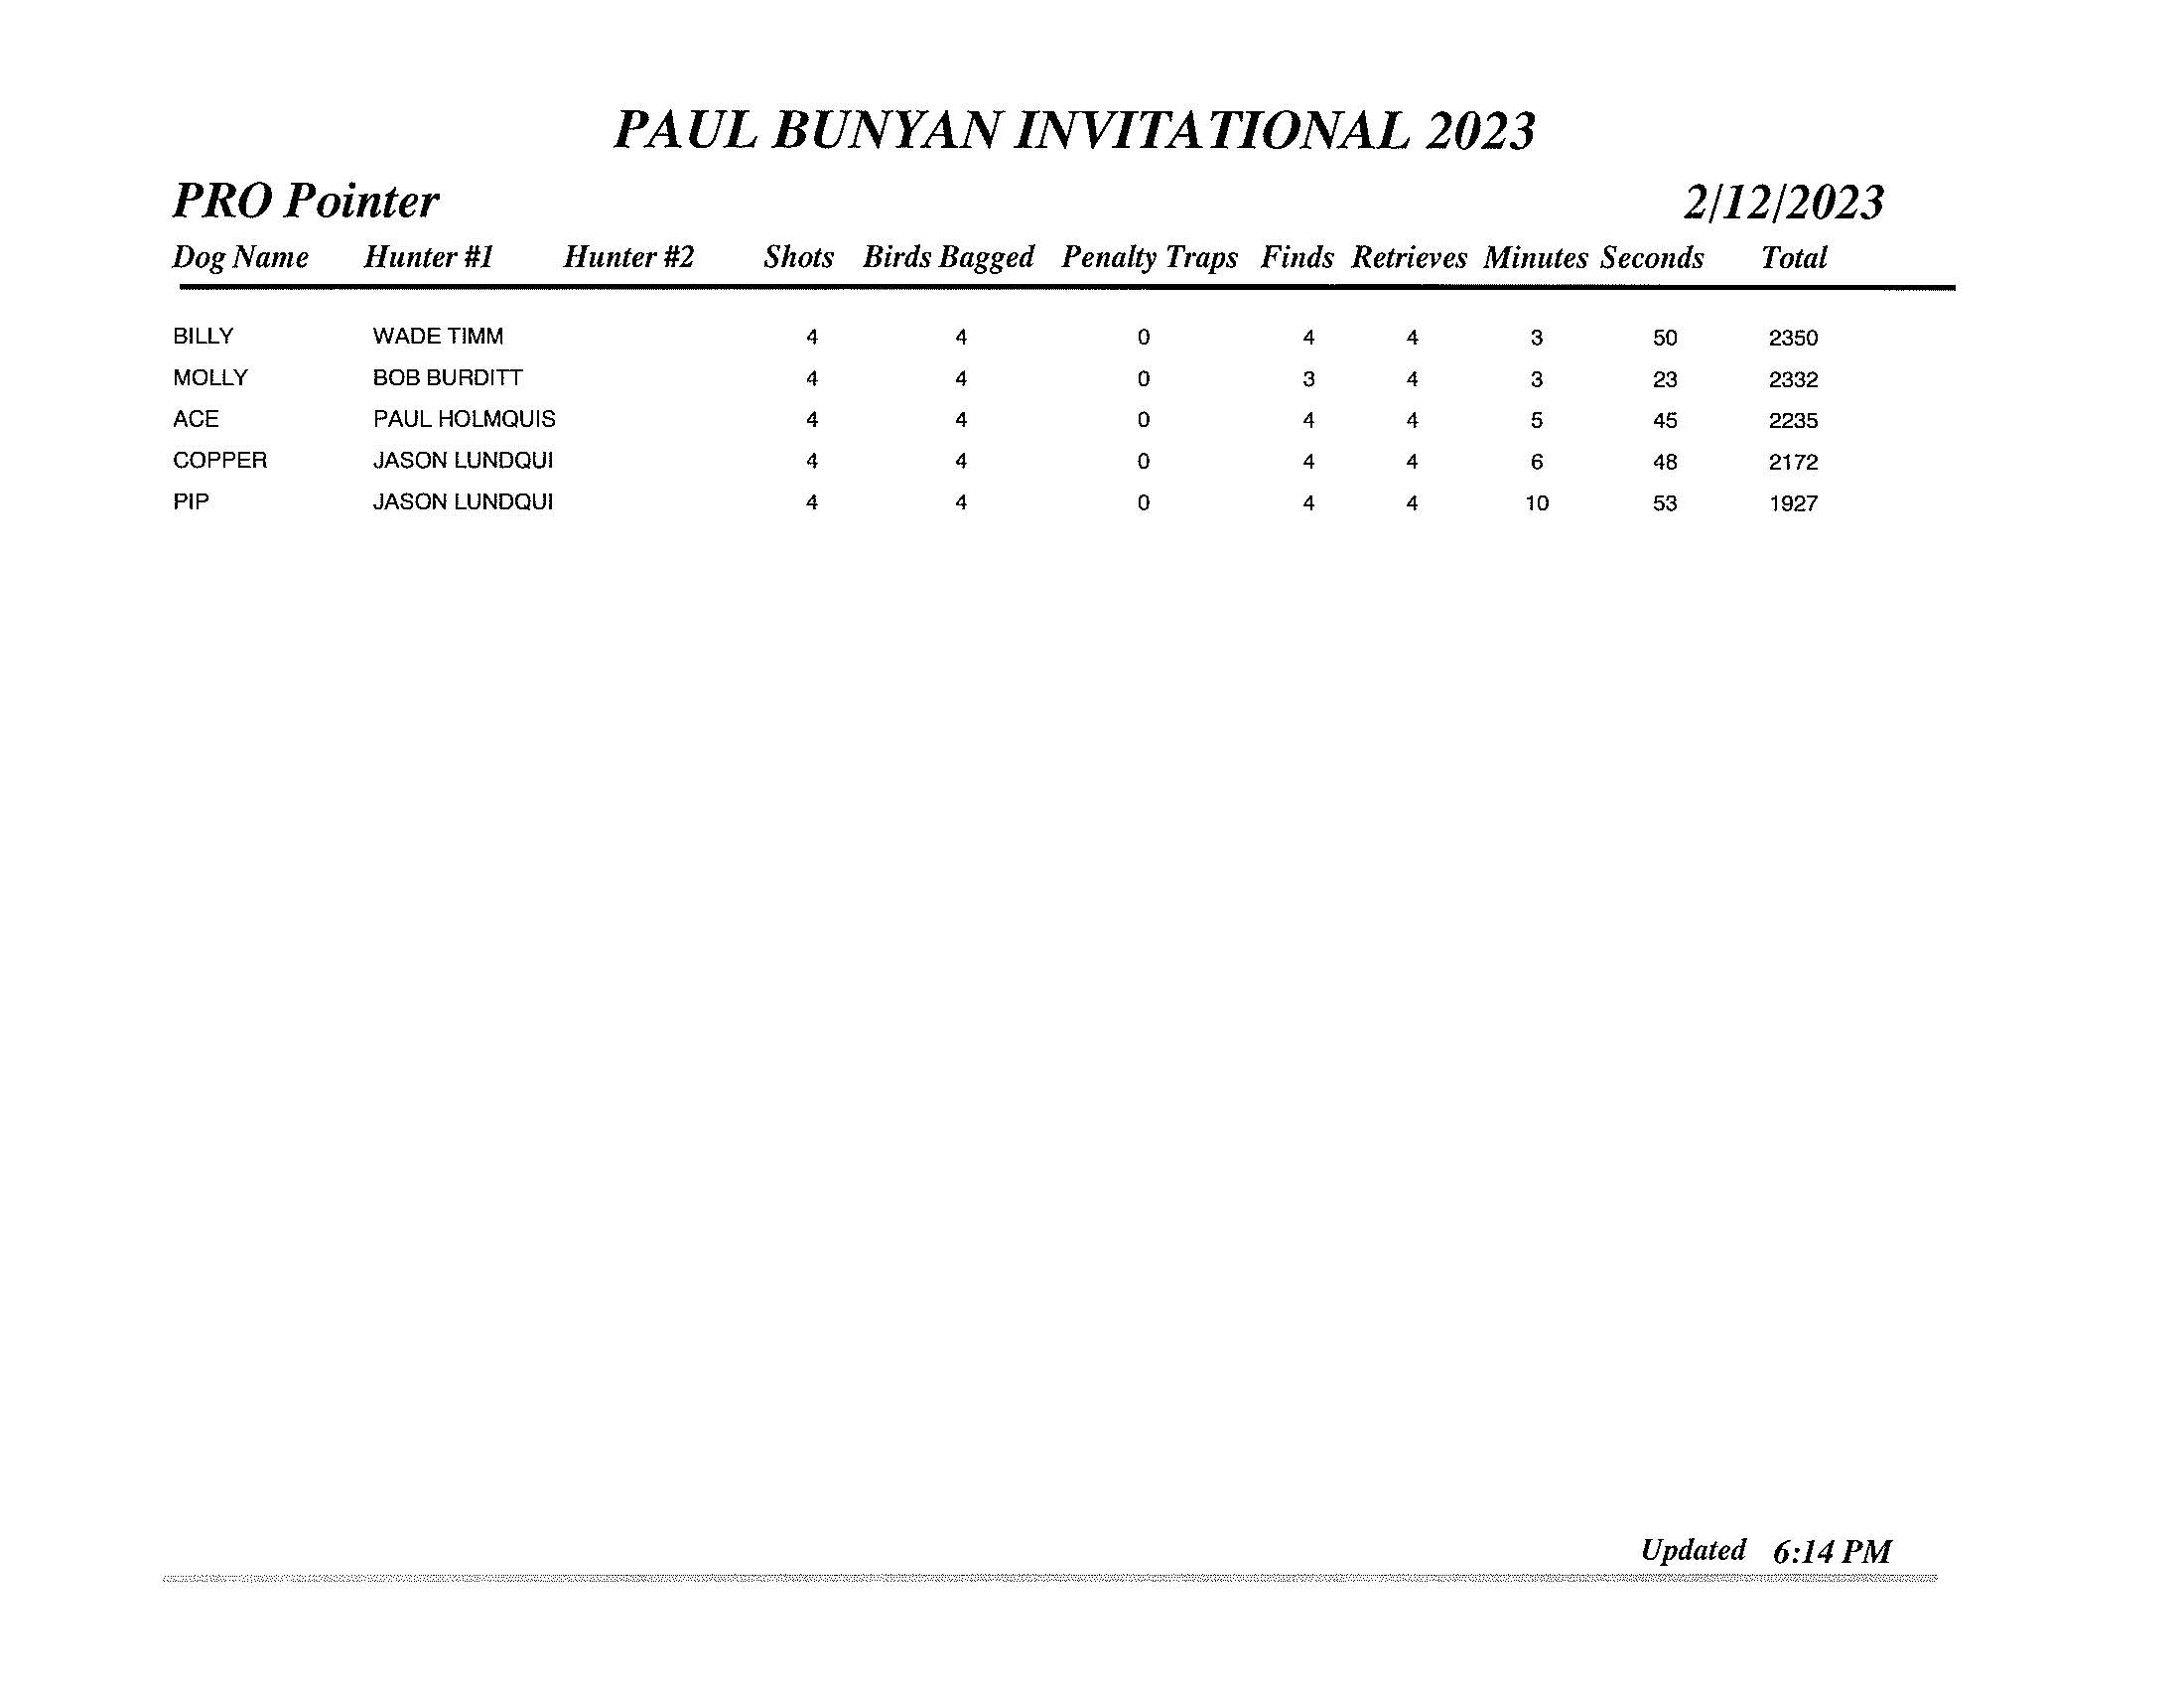 GDC Paul Bunyan Final 2023 (15)